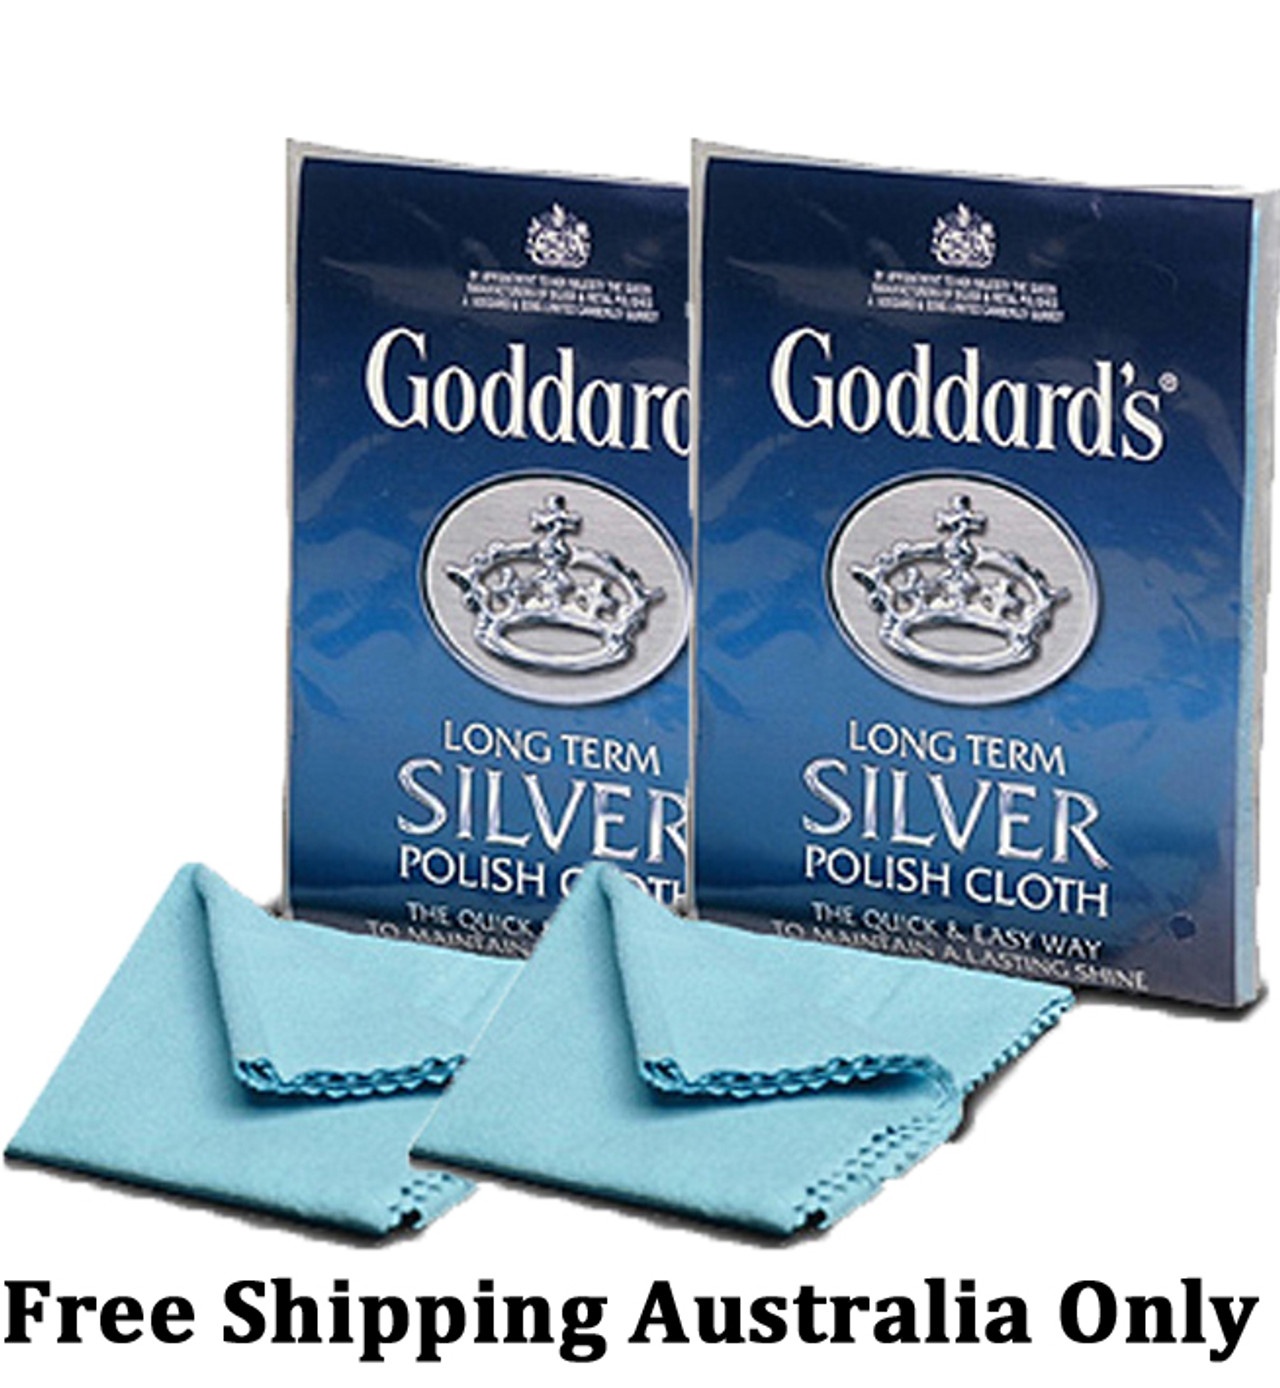 3 goddard's long term silver pad